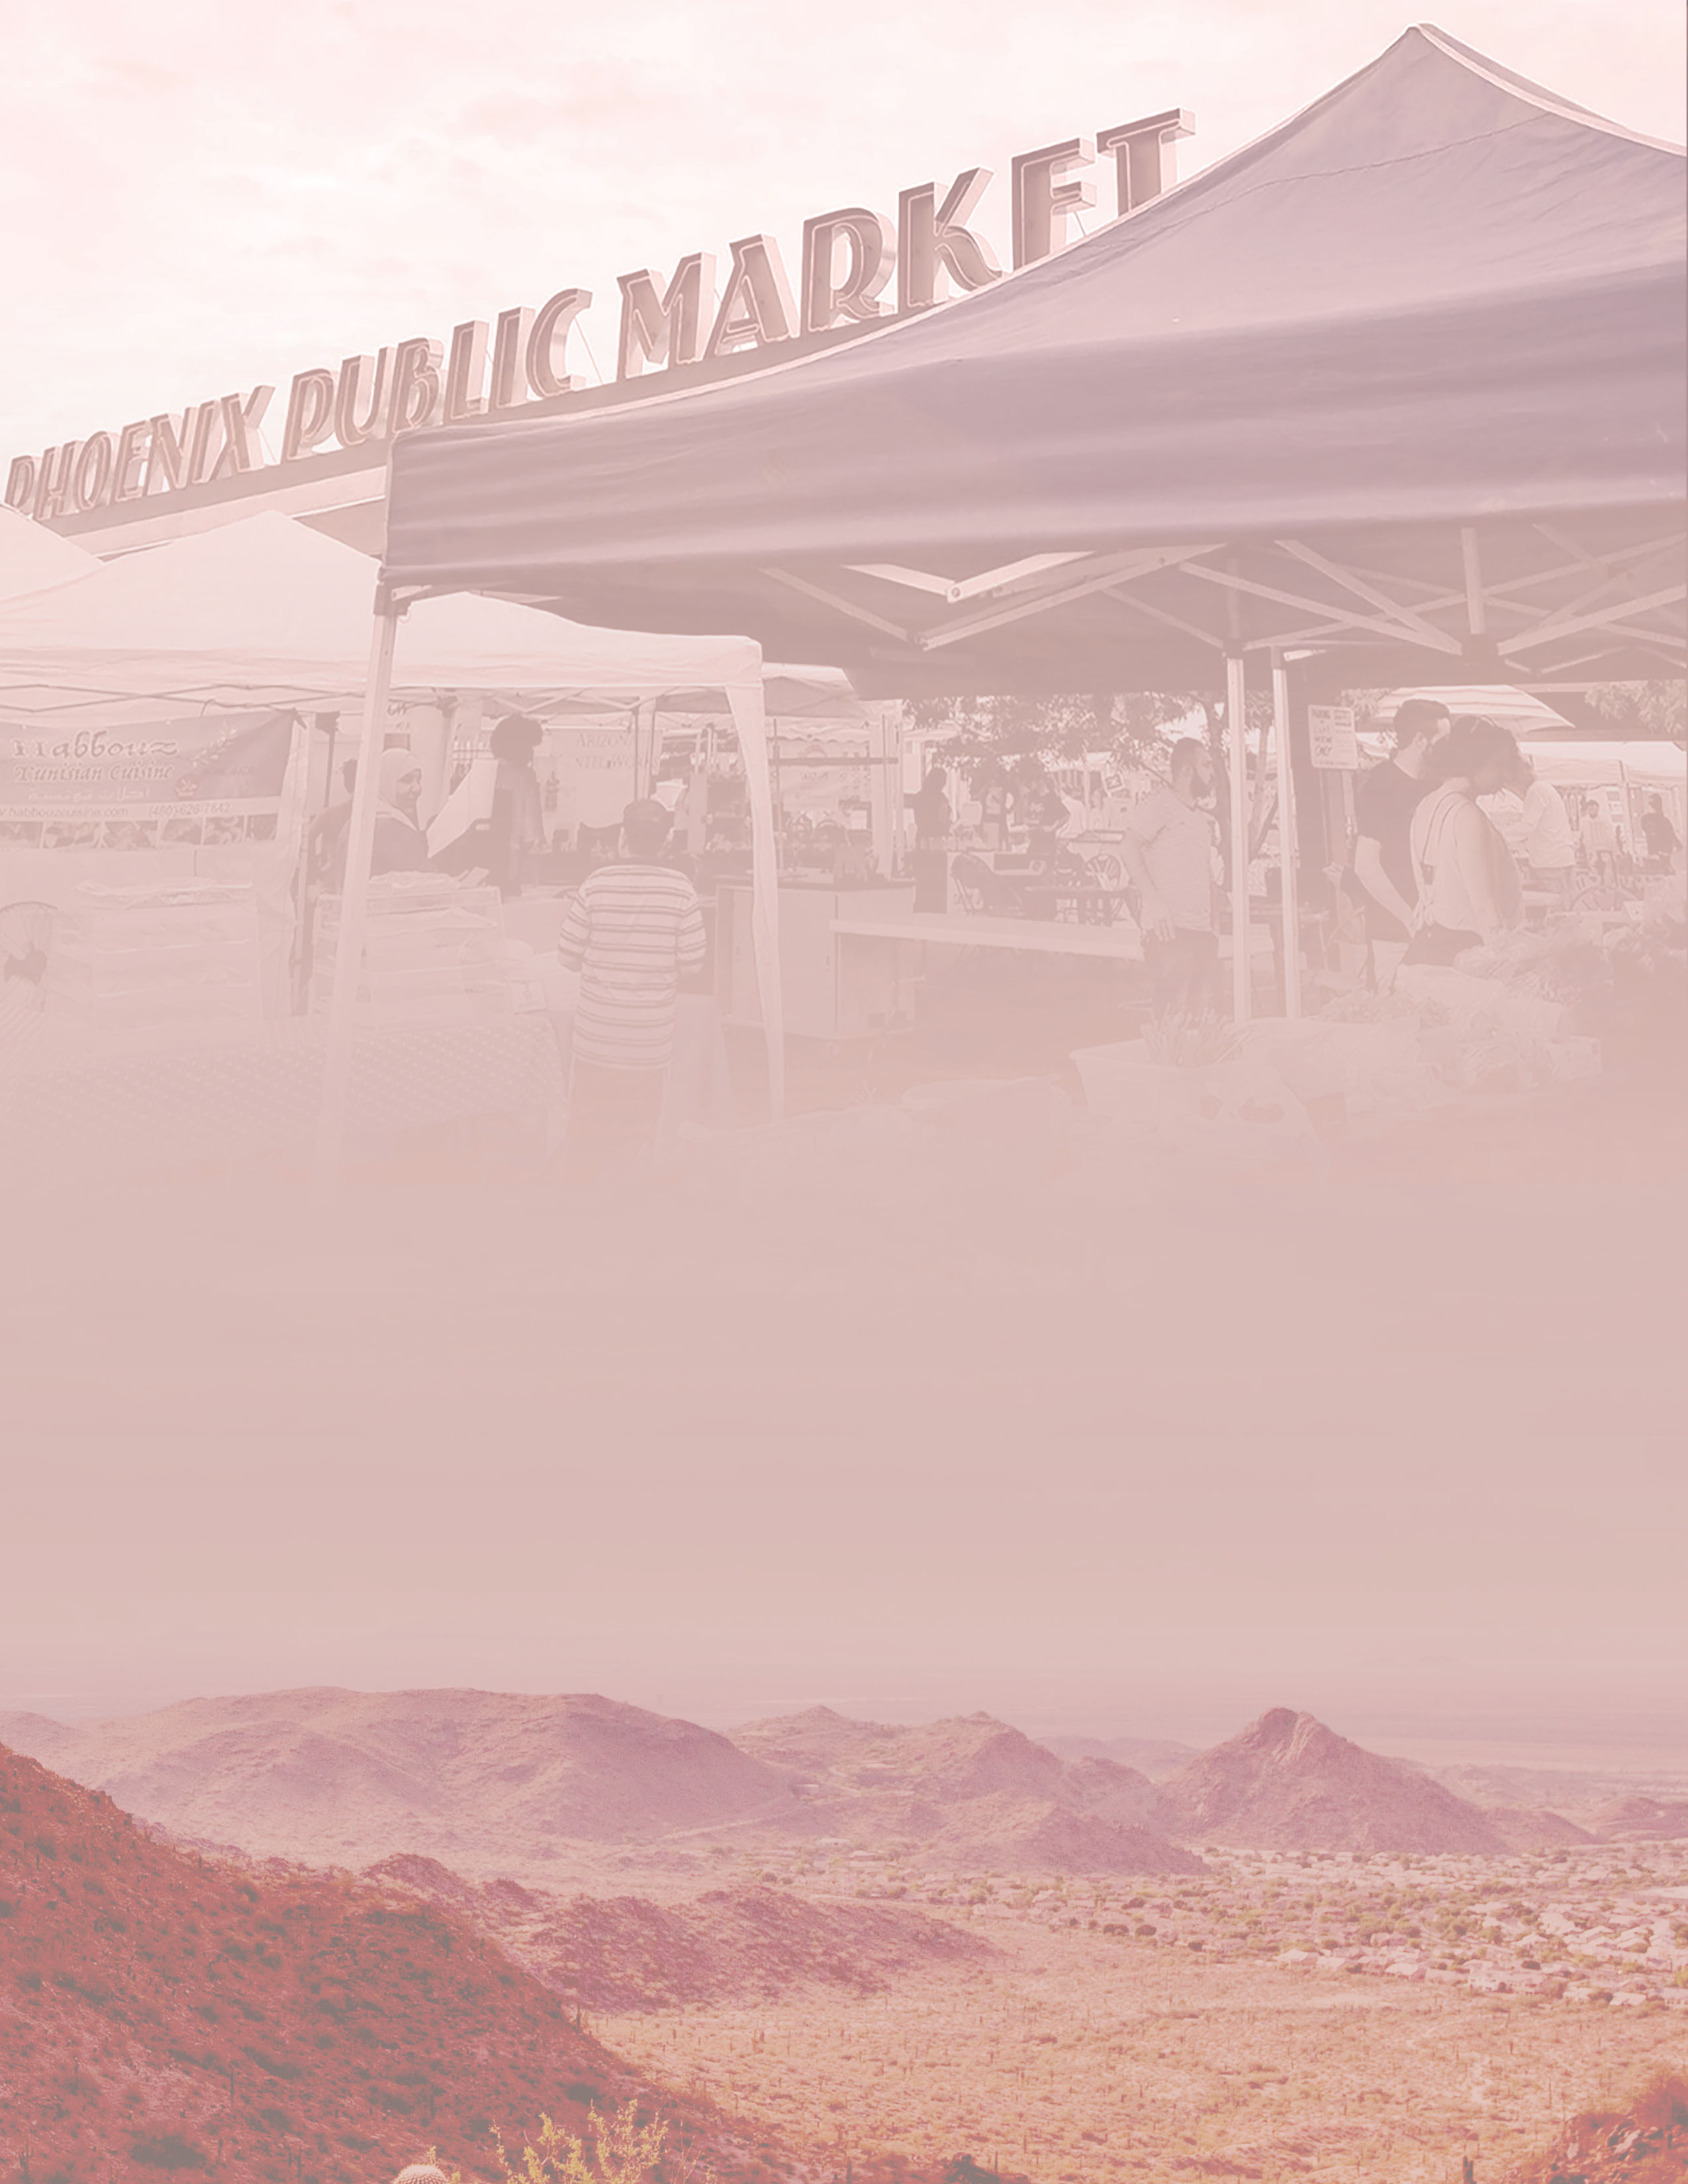 Meet Your Literary Community at the Phoenix Public Market October 6, 2018